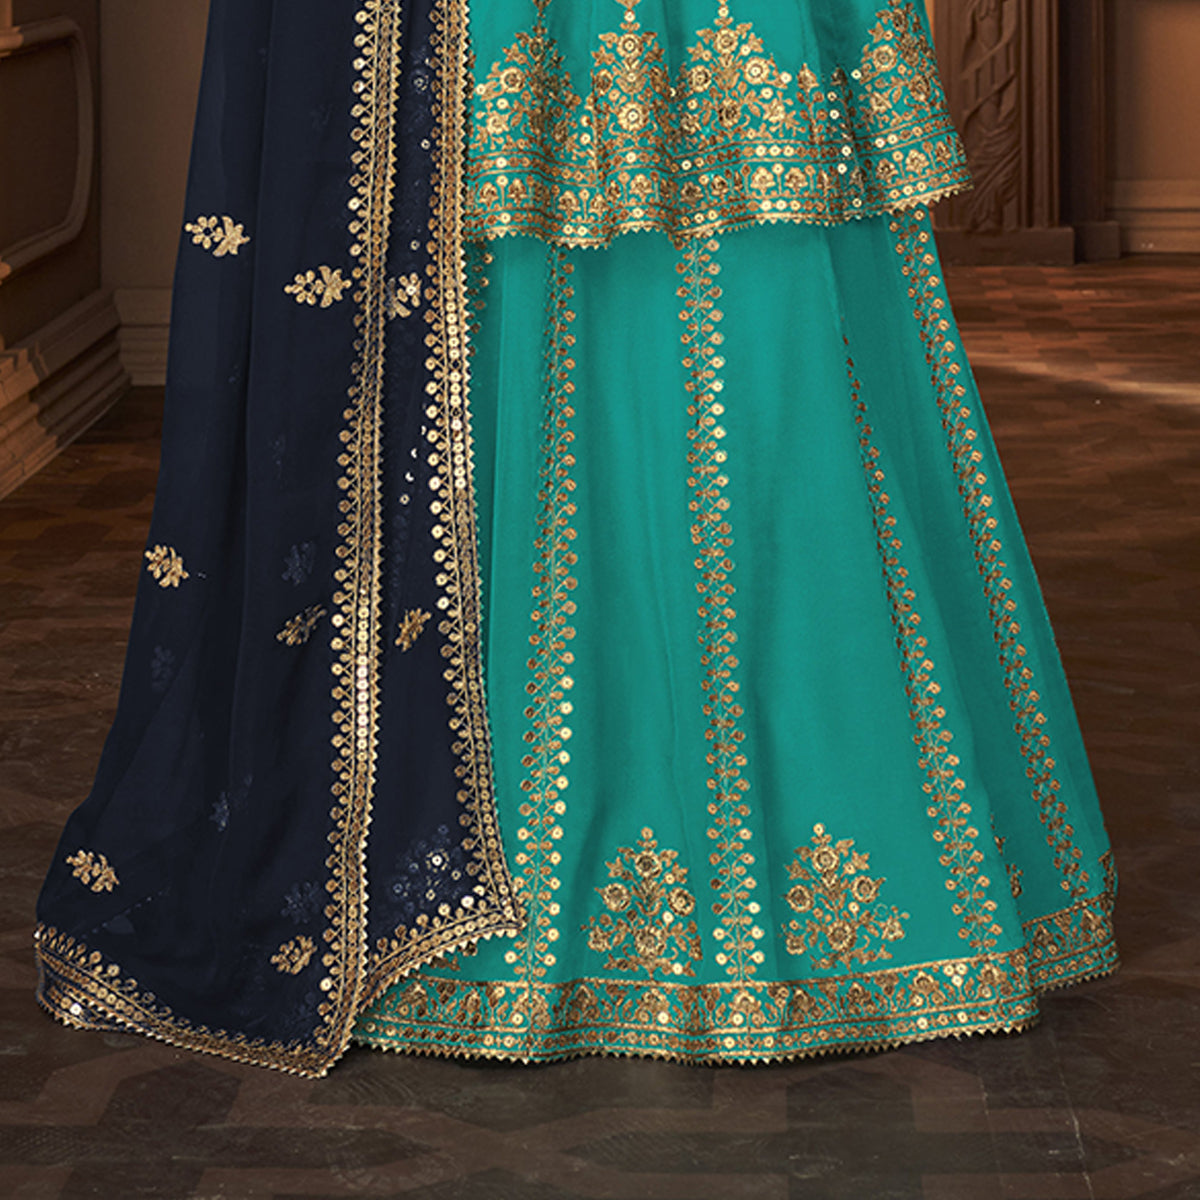 Shafnufab Turquoise Indian Pakistani rich look georgette salwar kameez suit